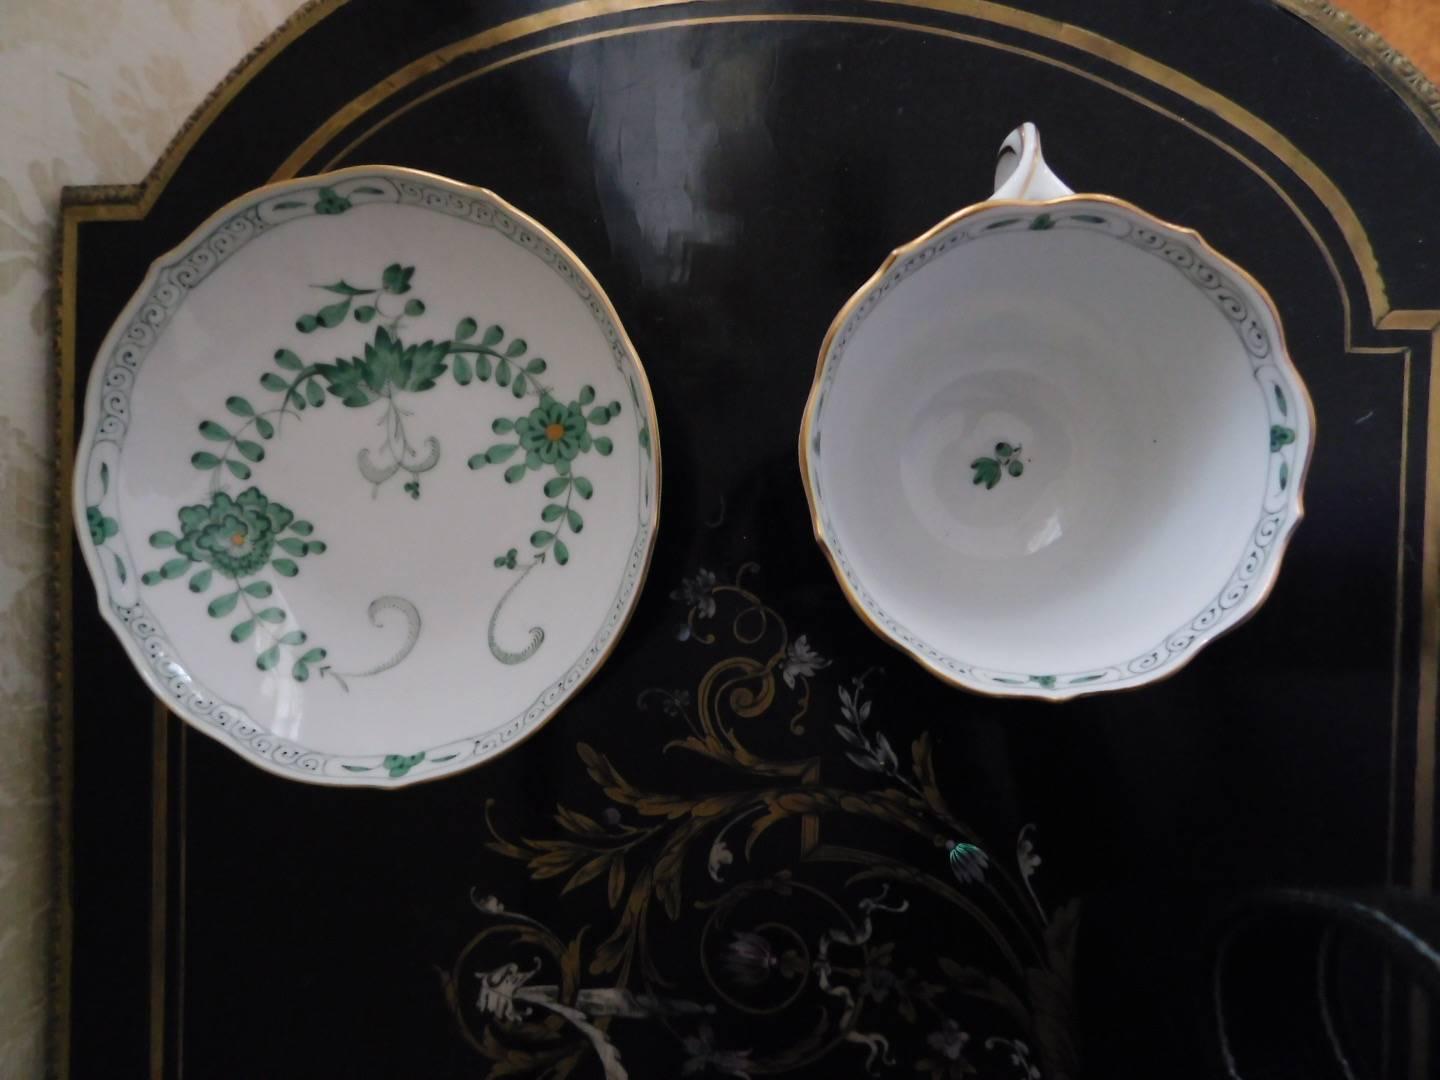 Meissen porcelain green dragon cup and saucer
Saucer measures 5.5 diameter.